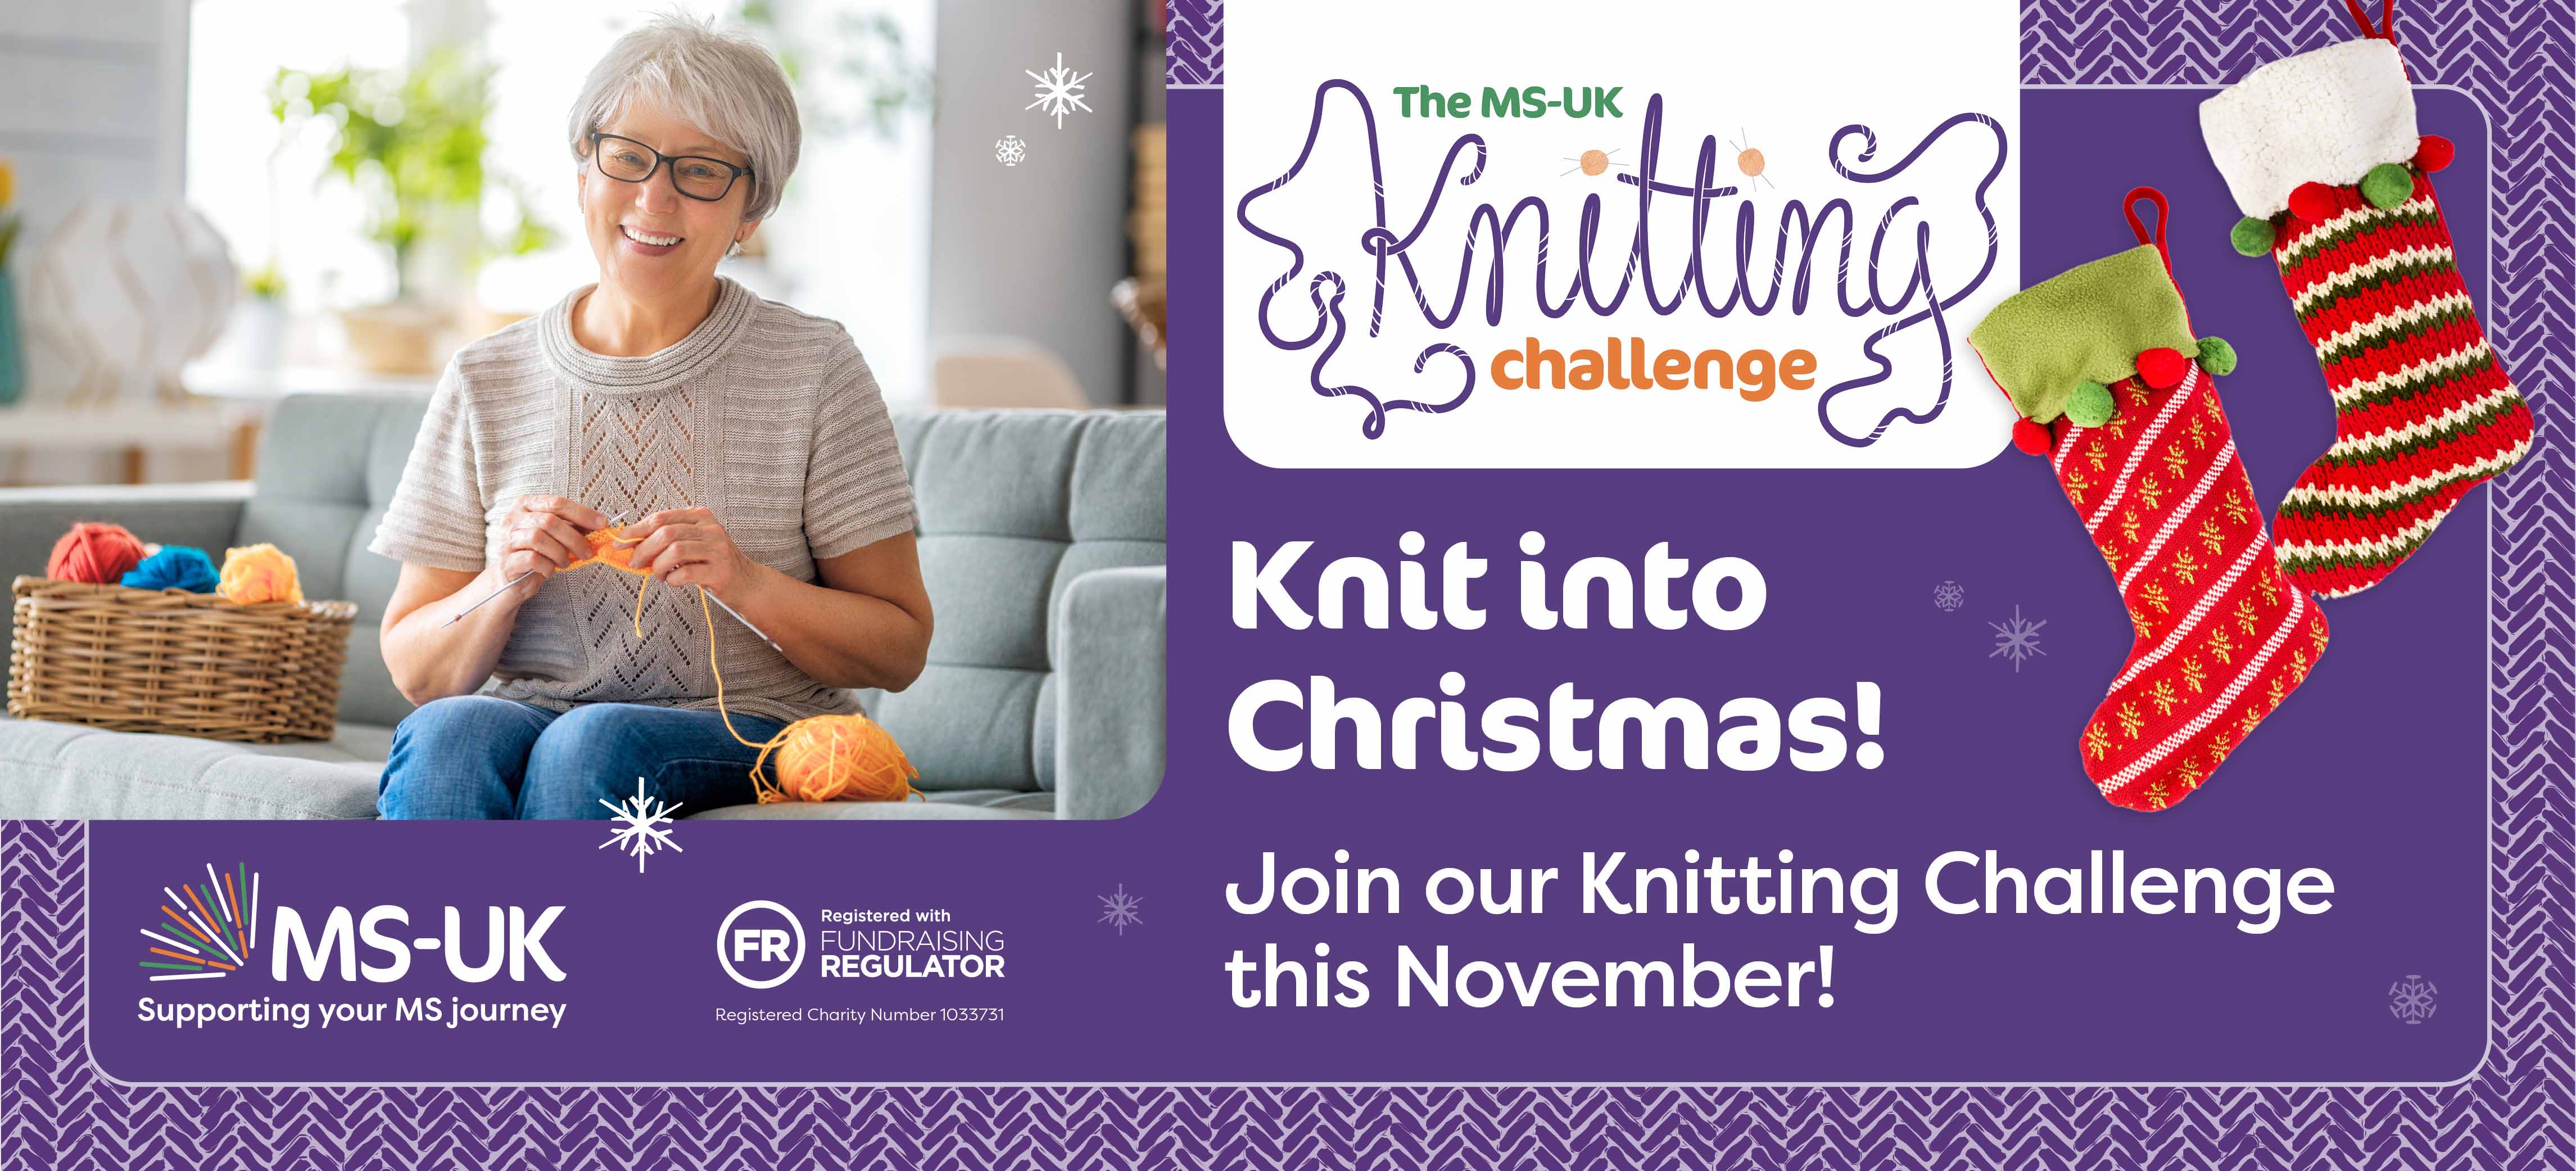 MS-UK Knitting Challenge